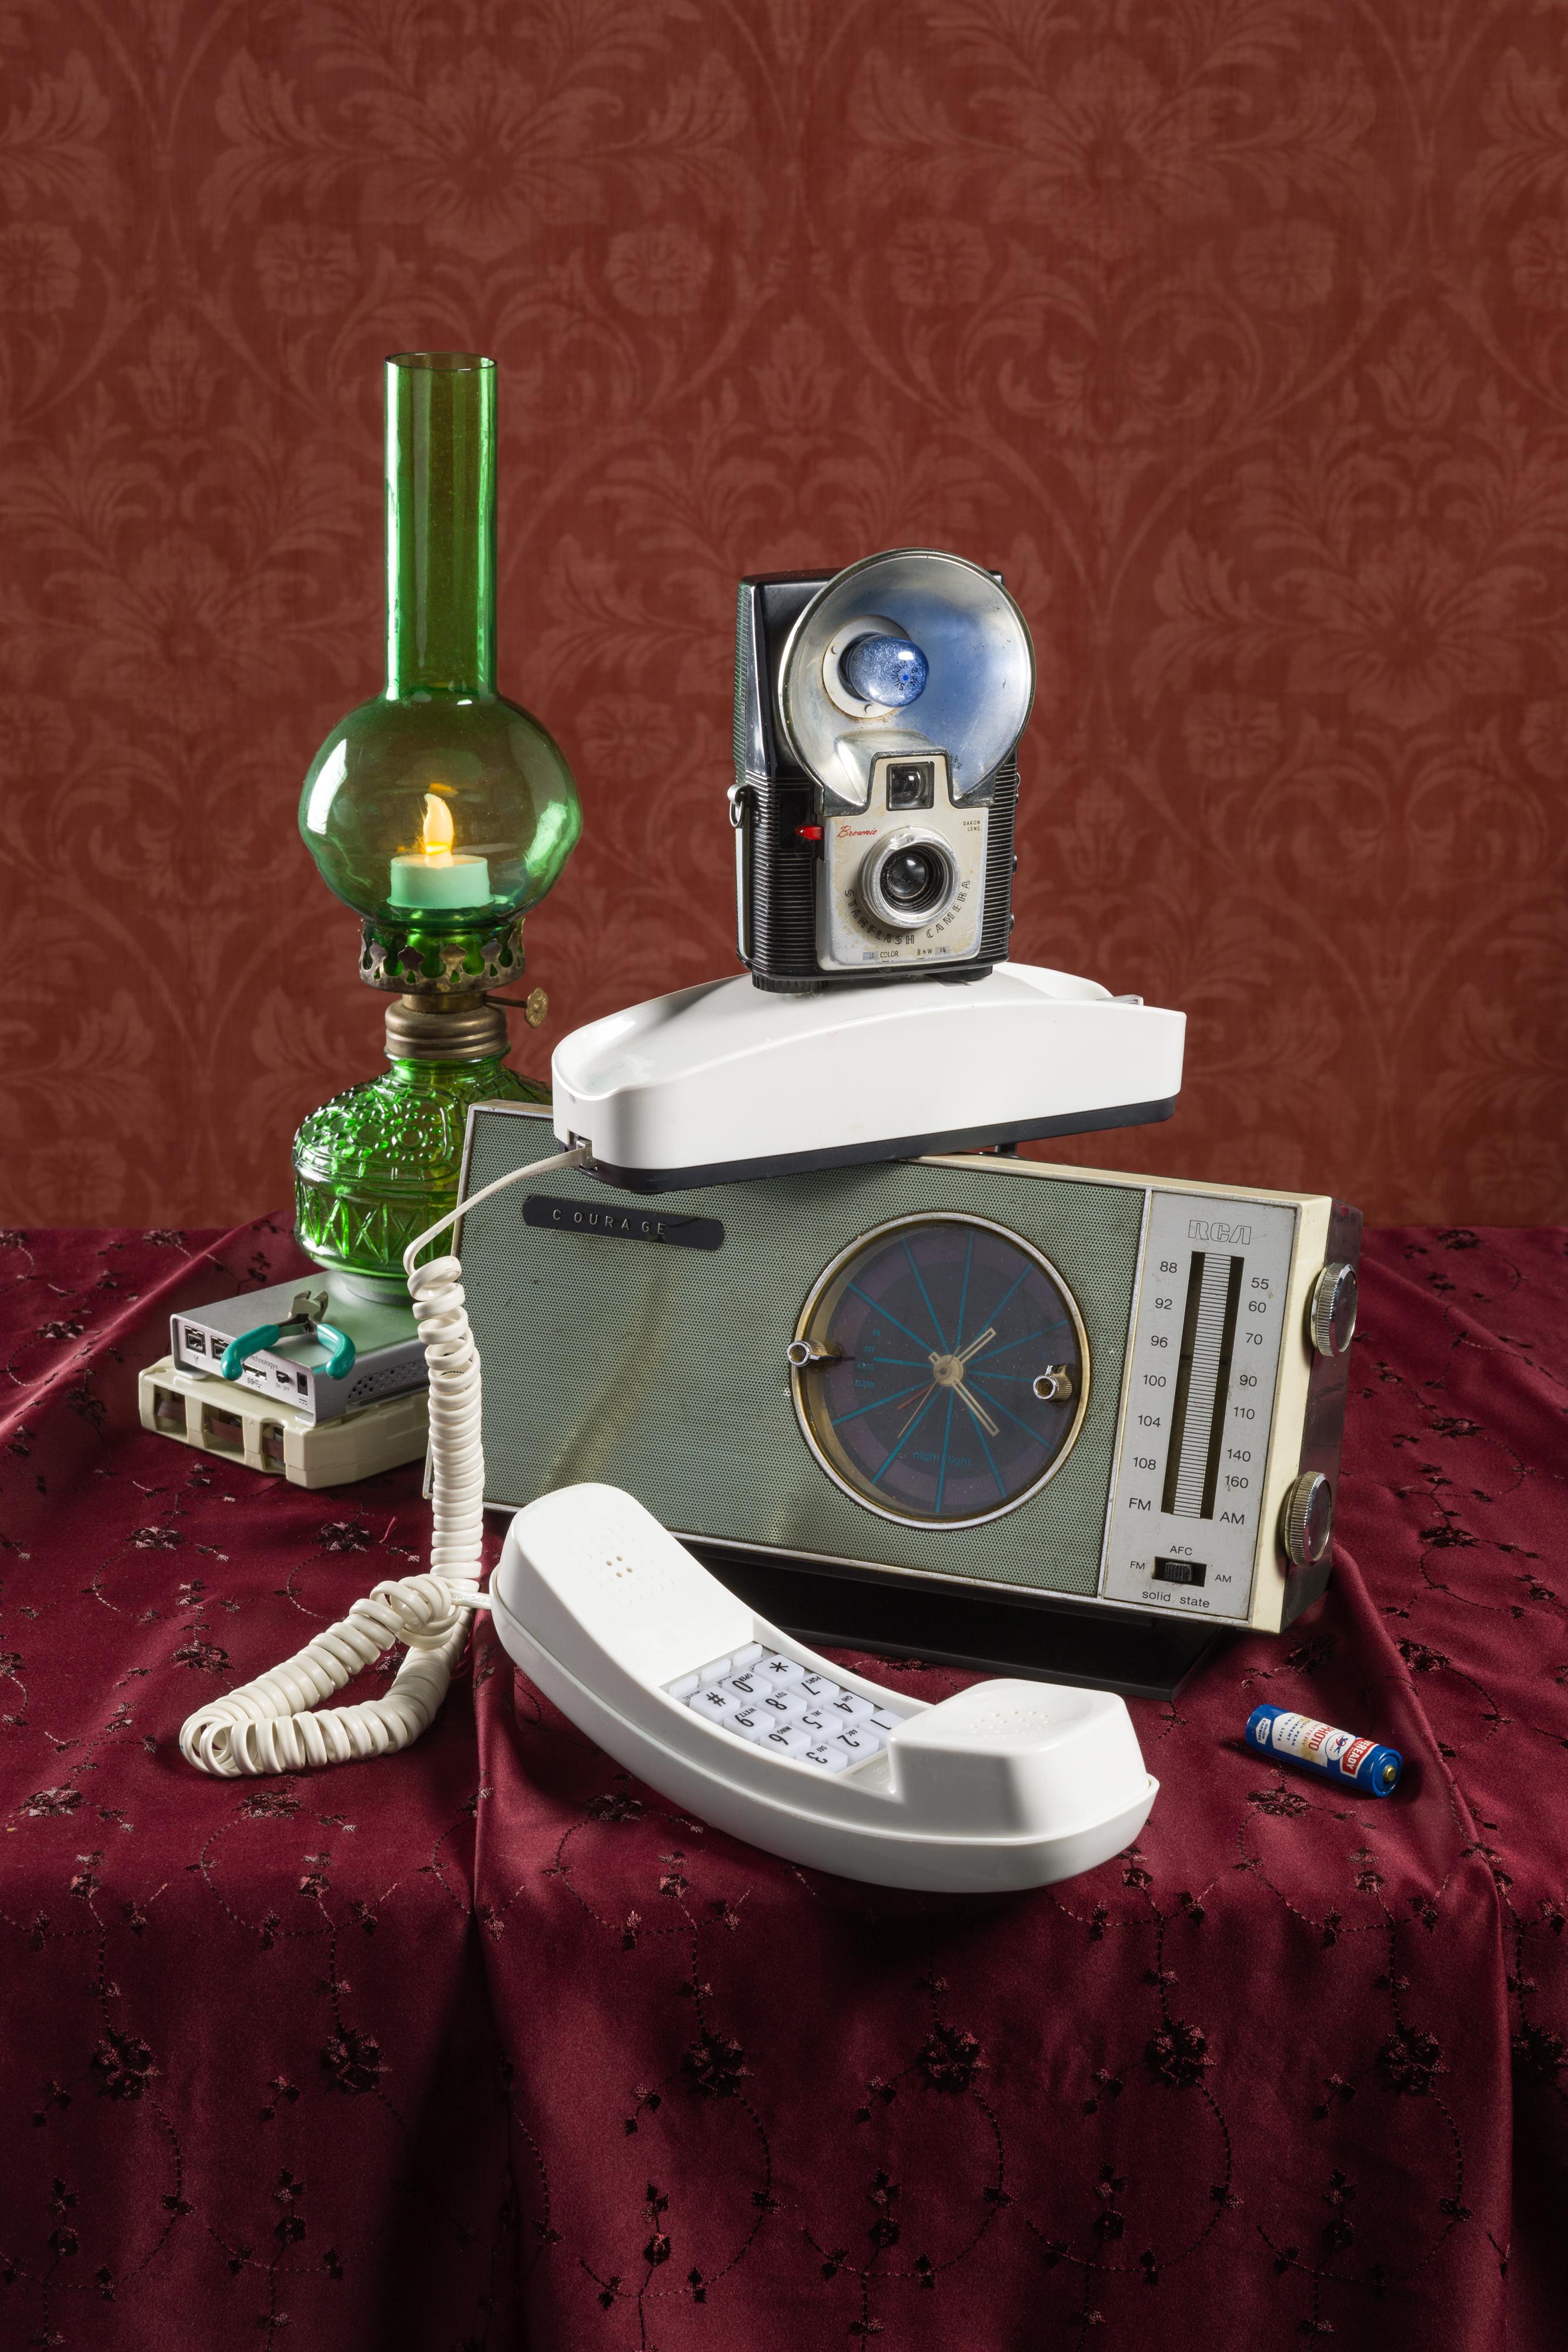 “Still Life with Clock Radio” Contemporary Still-life Photo with Vintage Tech